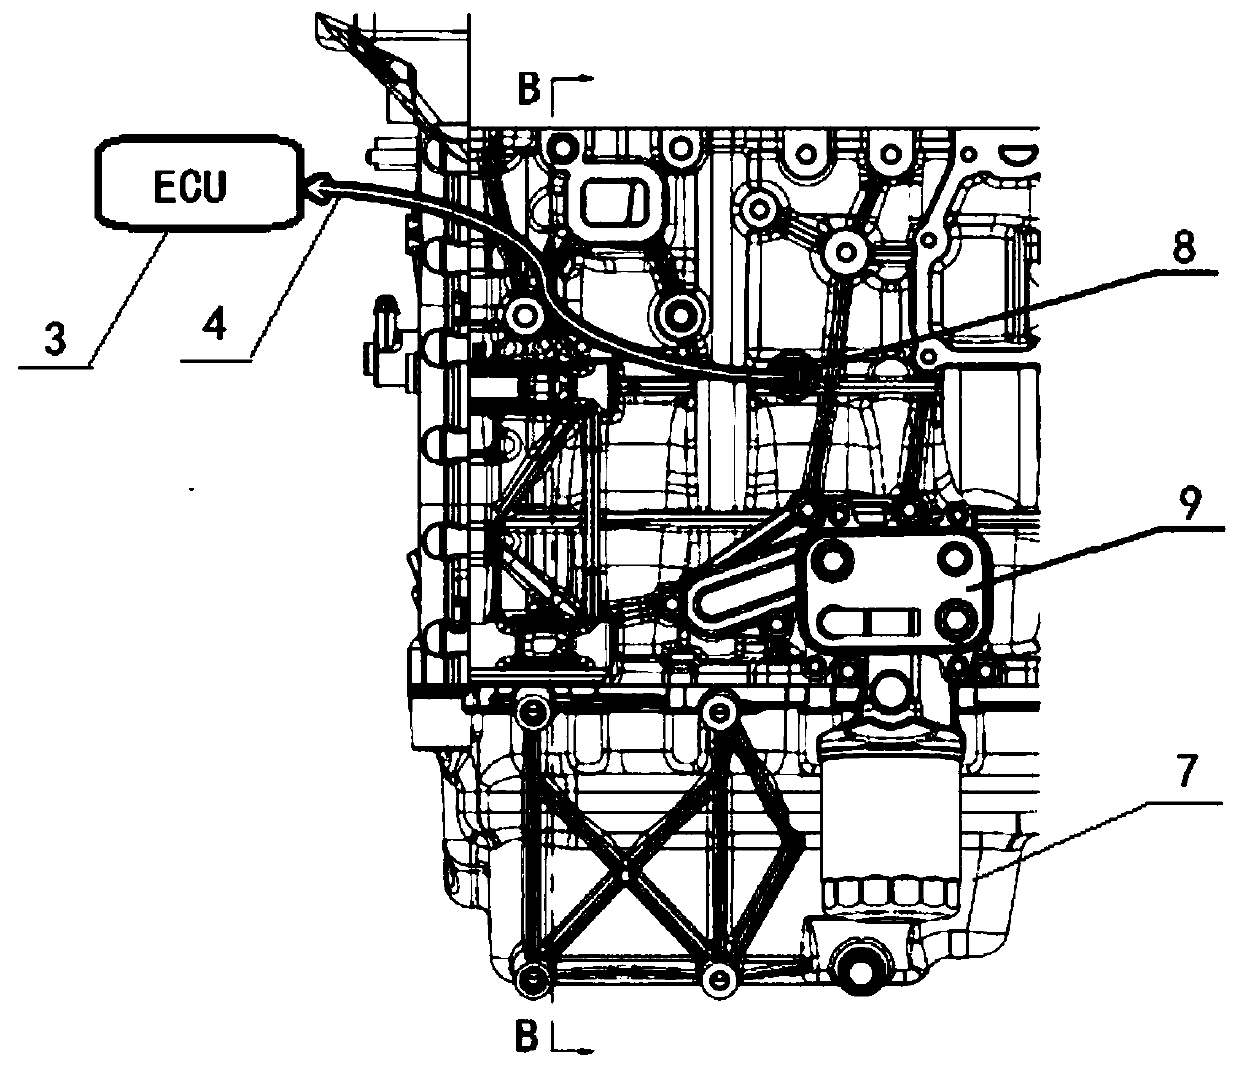 Engine lubricating system